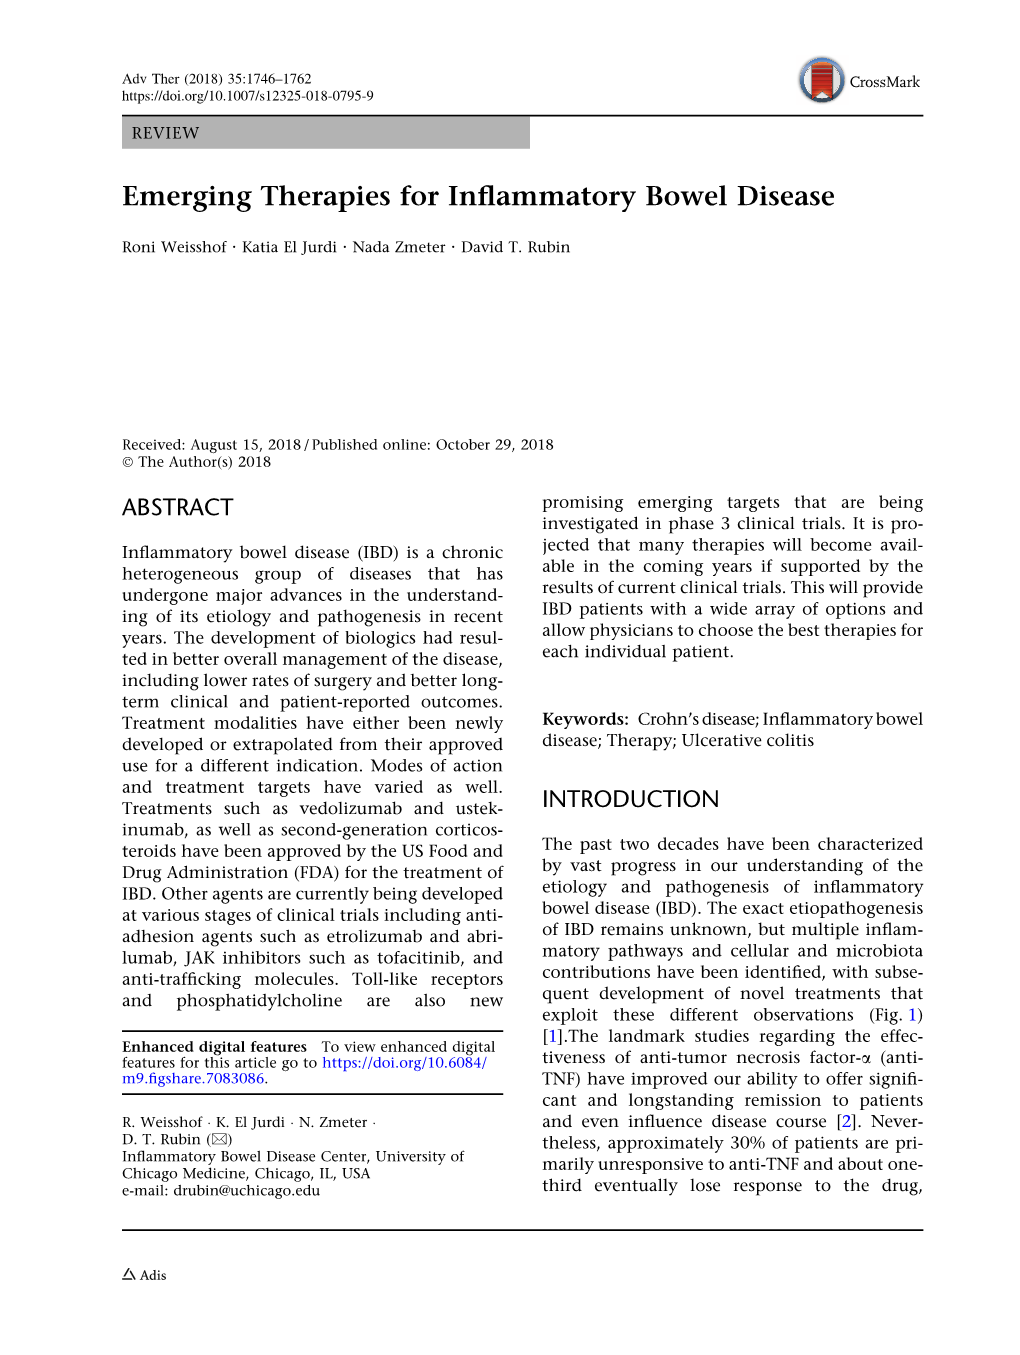 Emerging Therapies for Inflammatory Bowel Disease